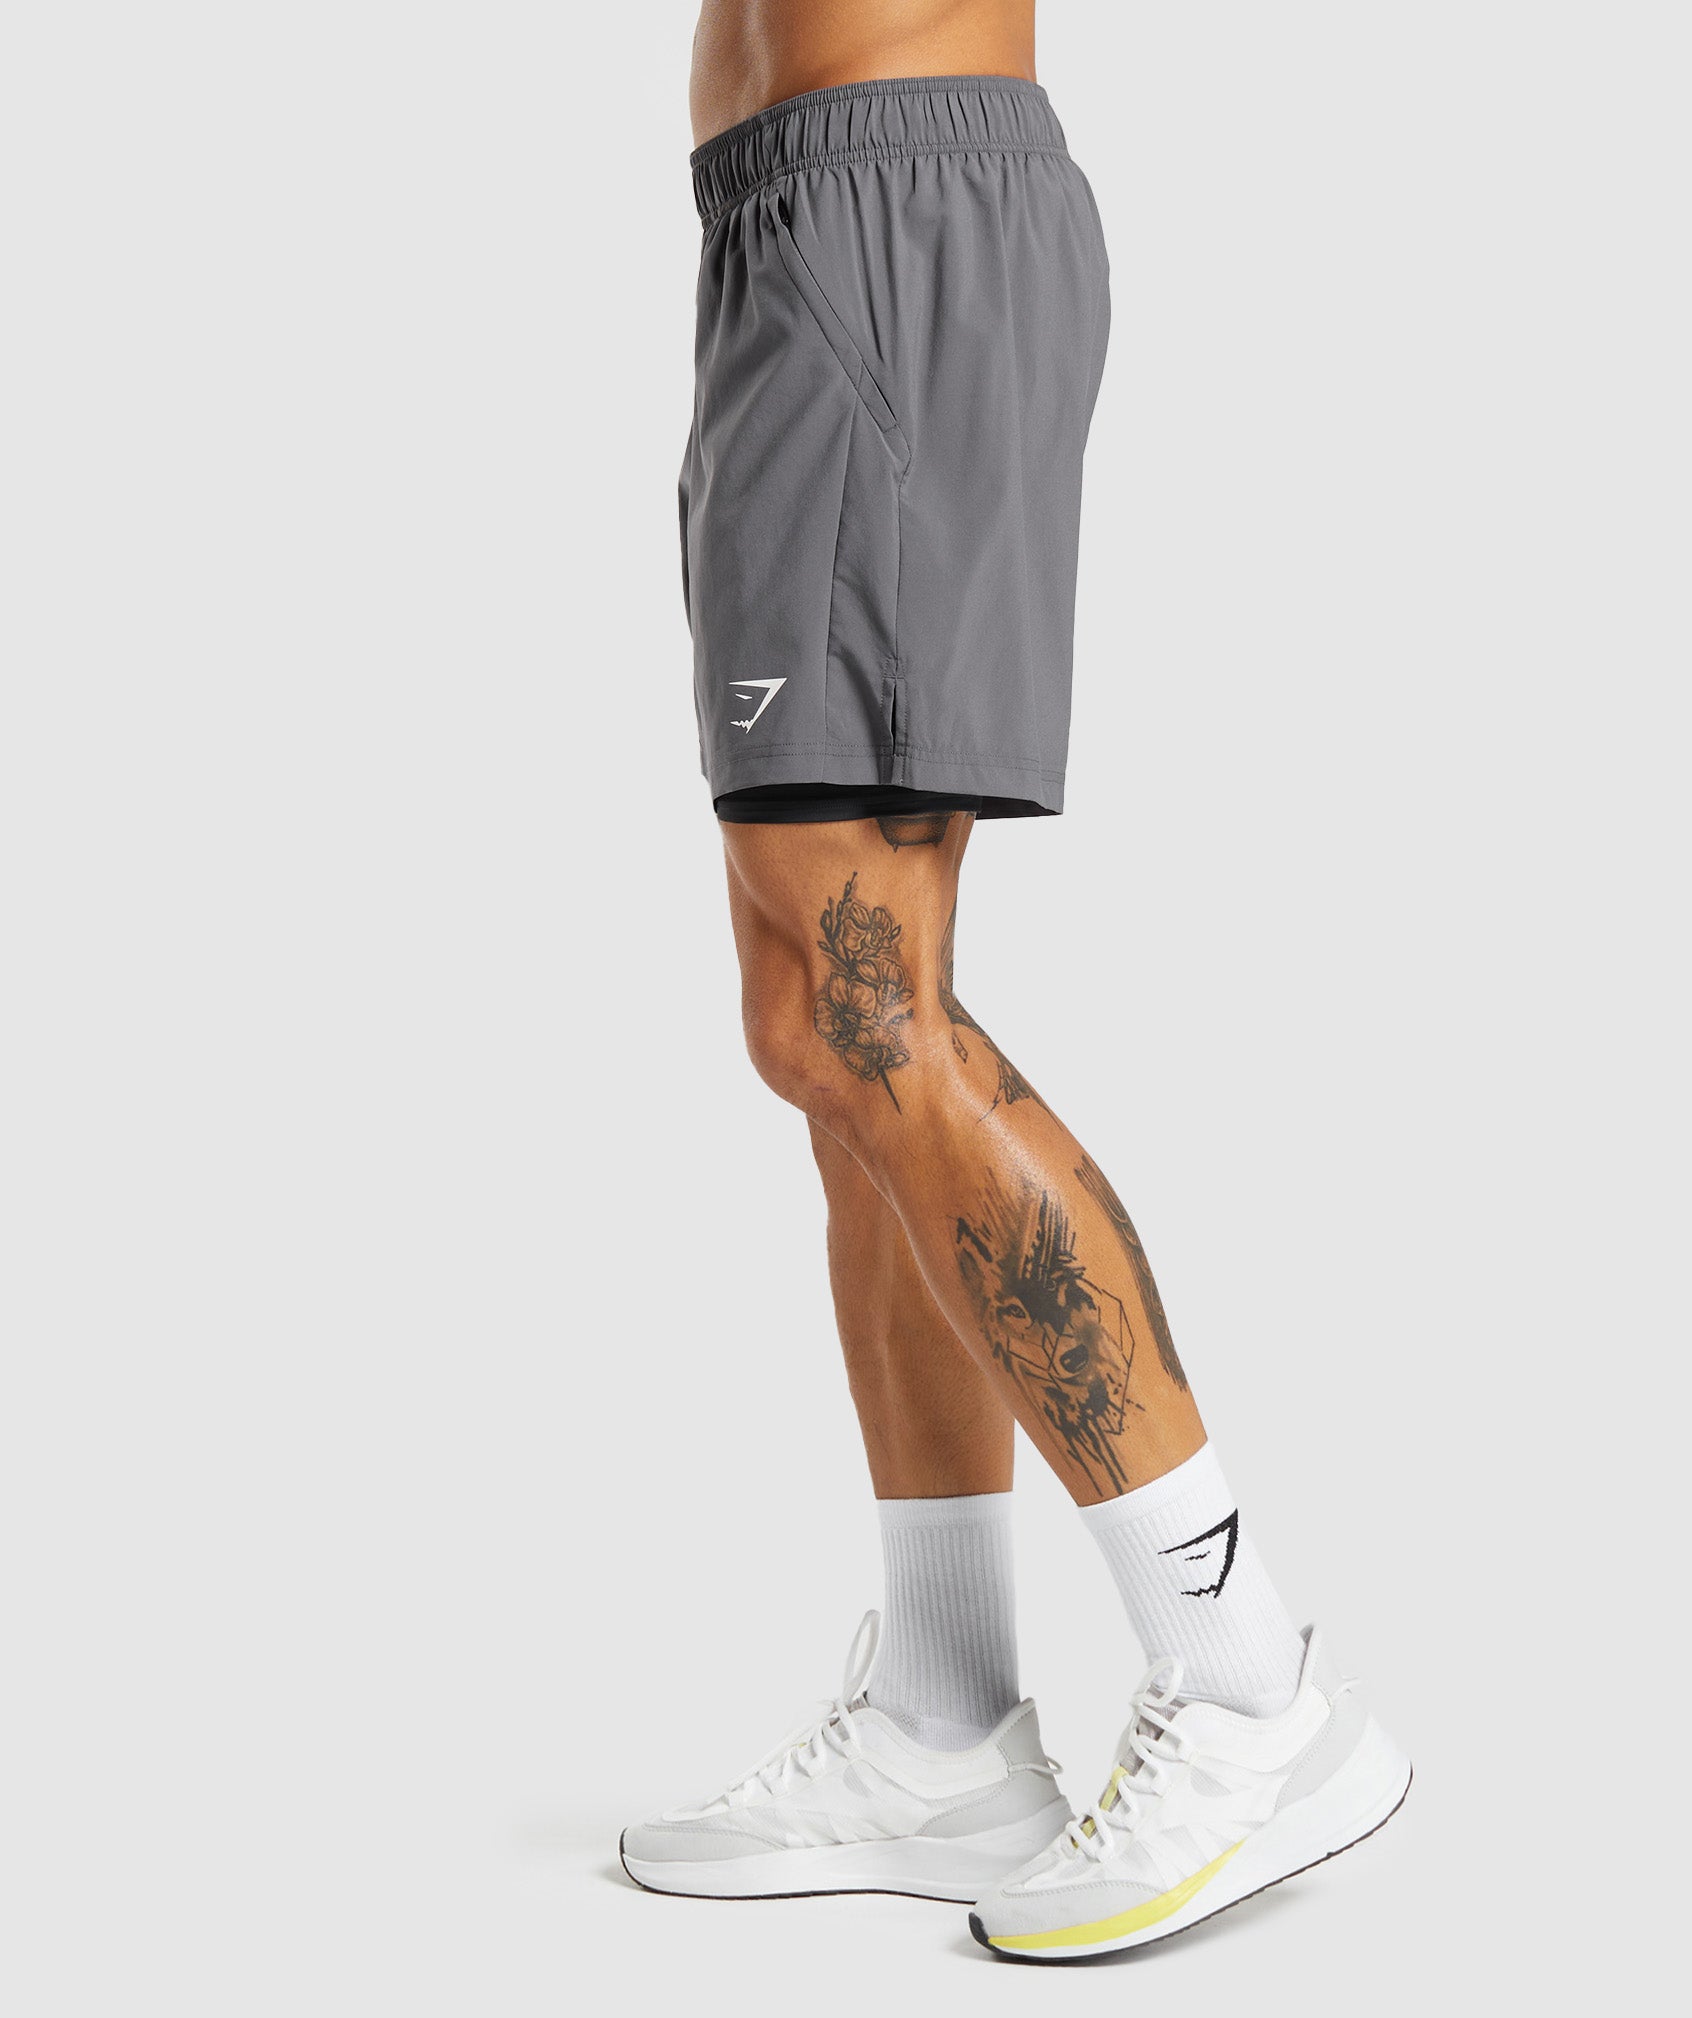 Gymshark Sport 7 2 In 1 Shorts - Silhouette Grey/Black